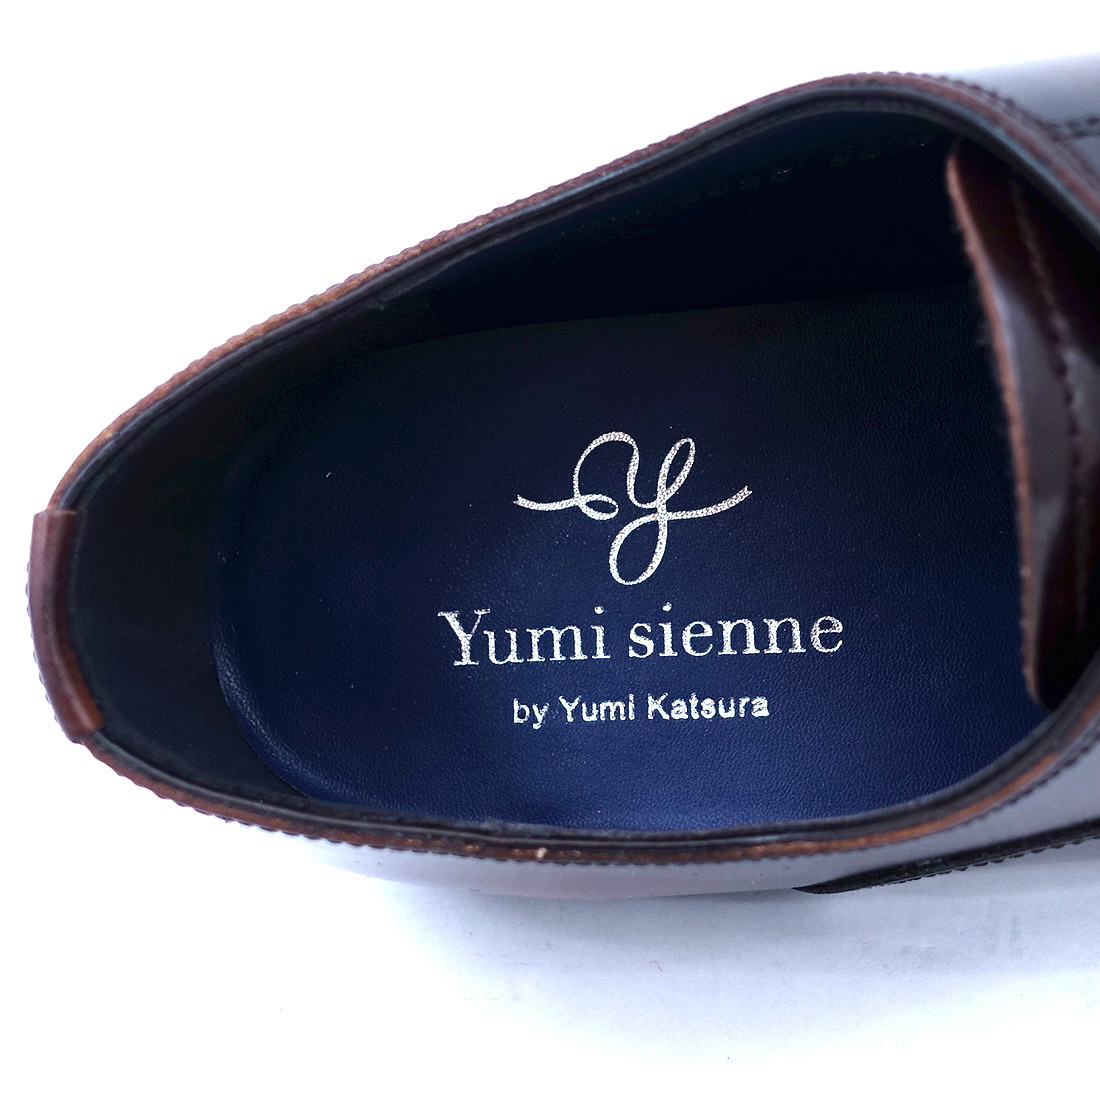 ▲Yumi Sienne ユミジェンヌ YS8035 ビジネスシューズ ストレートチップ 本革 メンズ 革靴 ブラック Black 黒 24.5cm (0910010661-bk-s245)_画像9